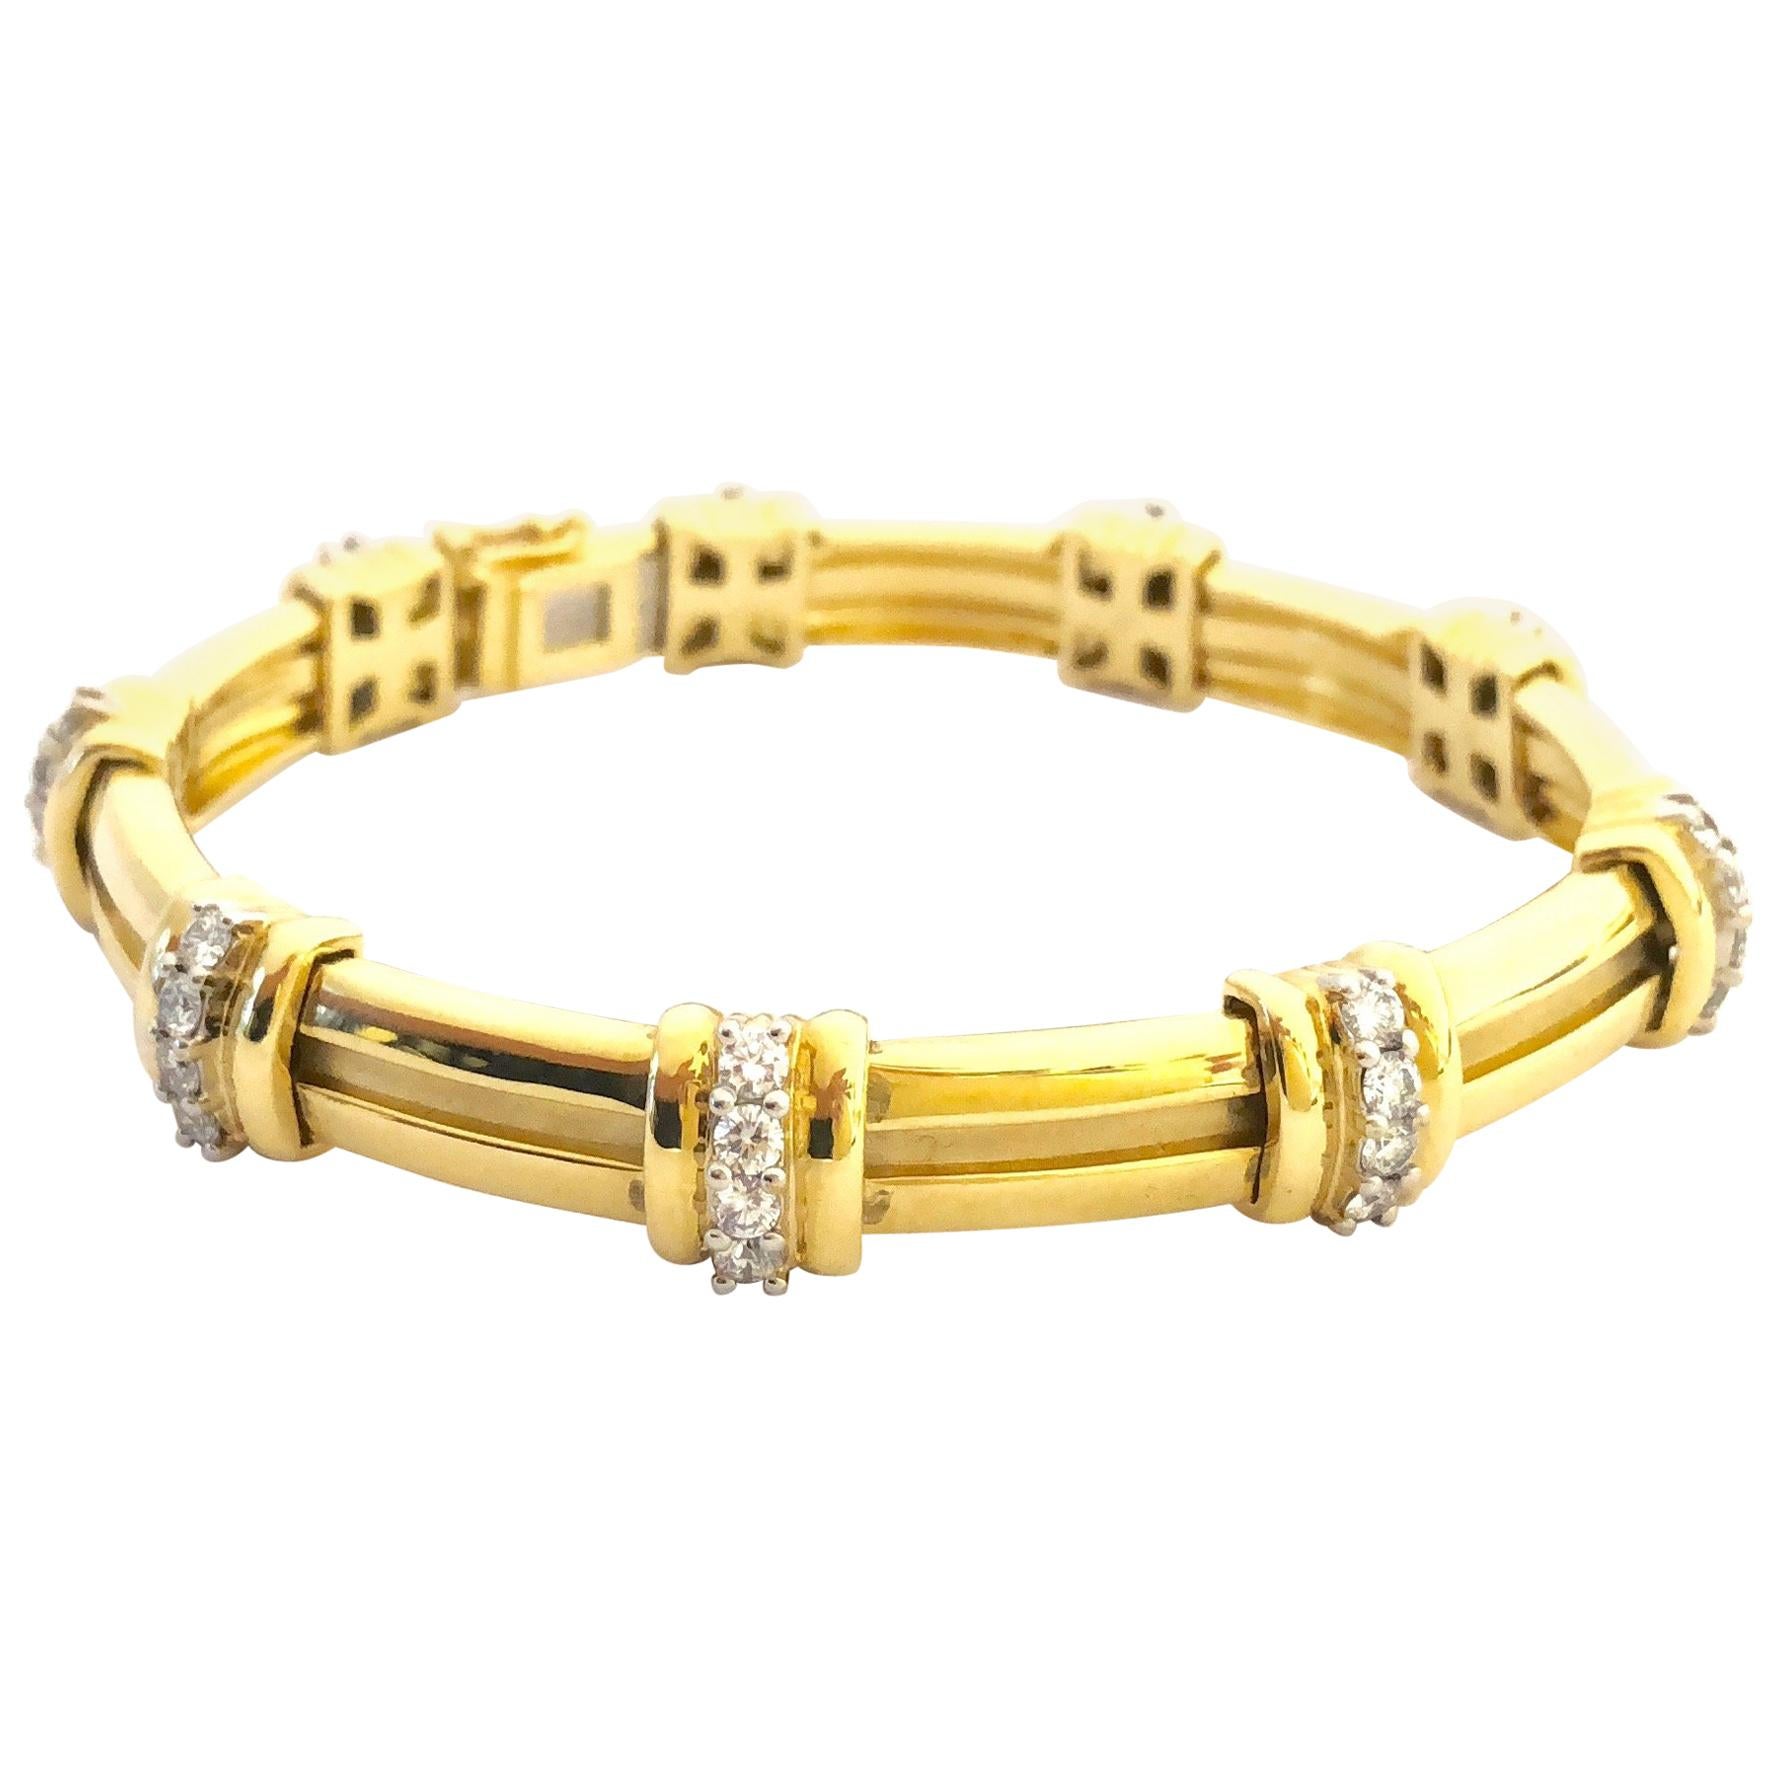  Tiffany & Co. Diamond Platinum and Gold Bracelet